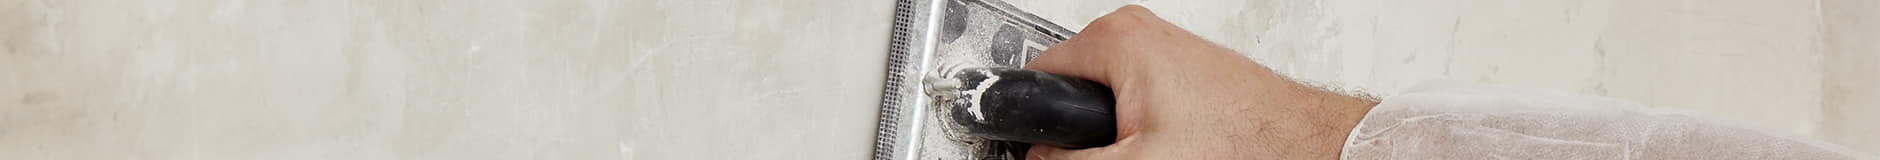 Primjena gotovog mikrocementa na neprohodnoj površini s lopaticom